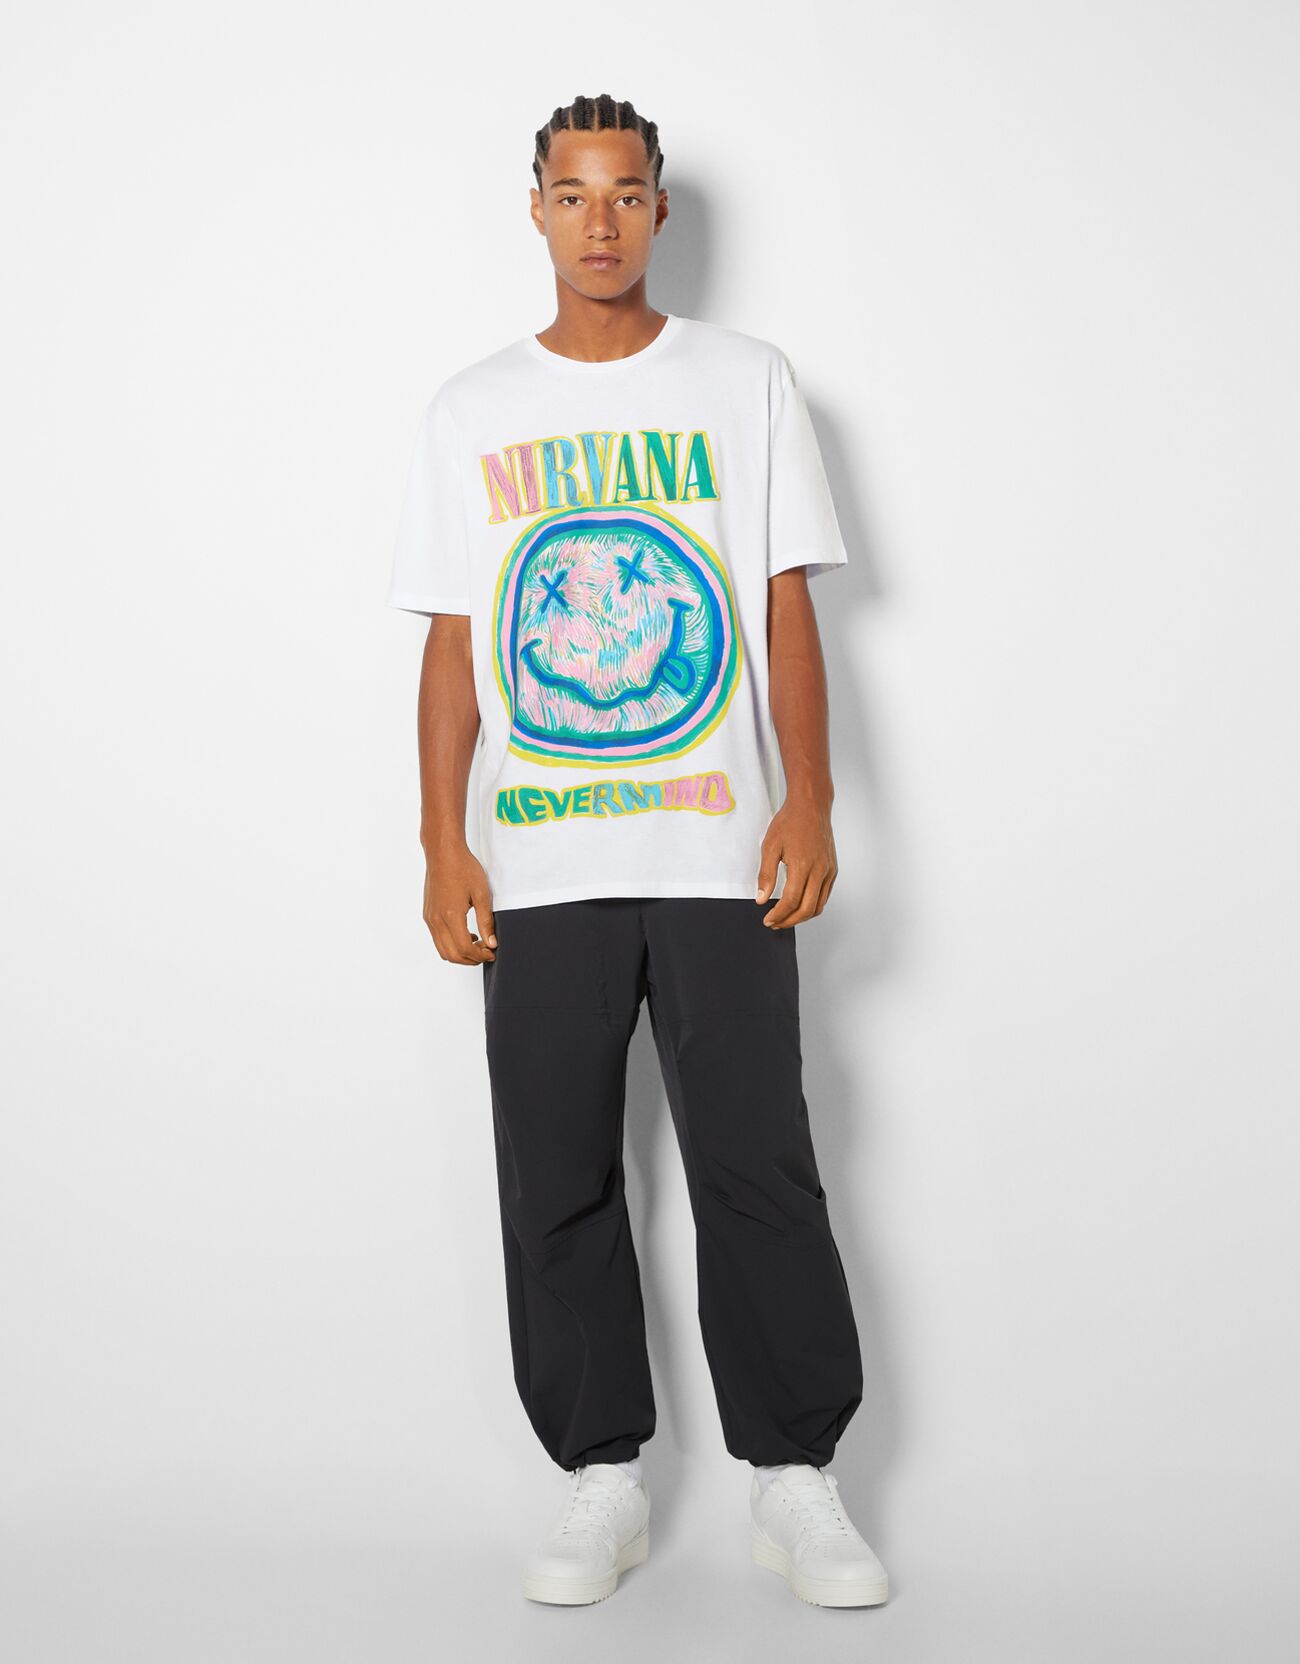 Bershka Camiseta Manga Corta Print Nirvana Hombre Xs Blanco